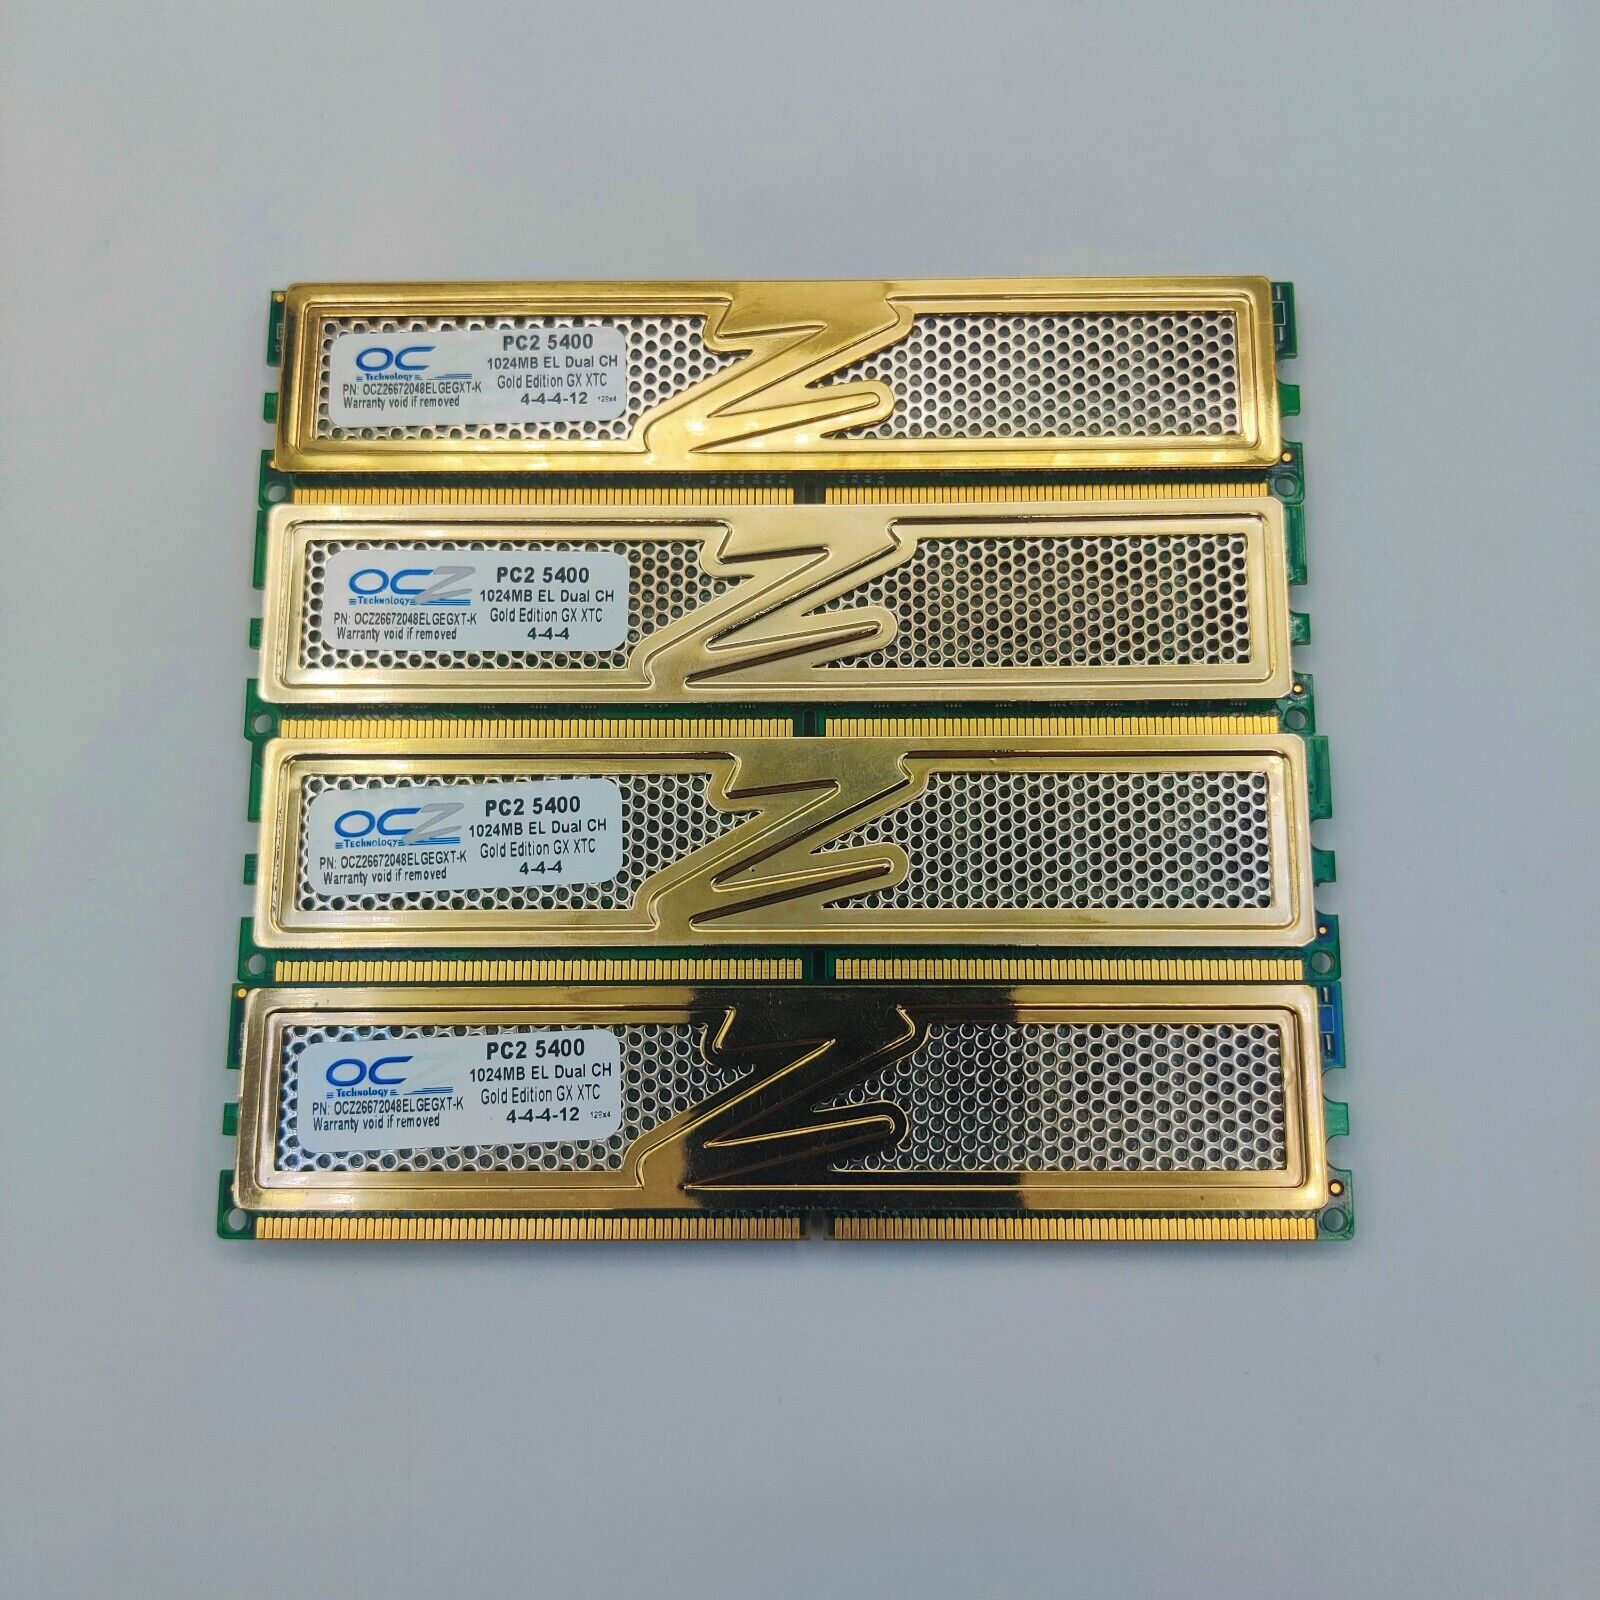 OCZ Gold Series 4GB (4x 1GB) DDR2 667 PC2 5400 Memory OCZ26672048ELGEGXT-K